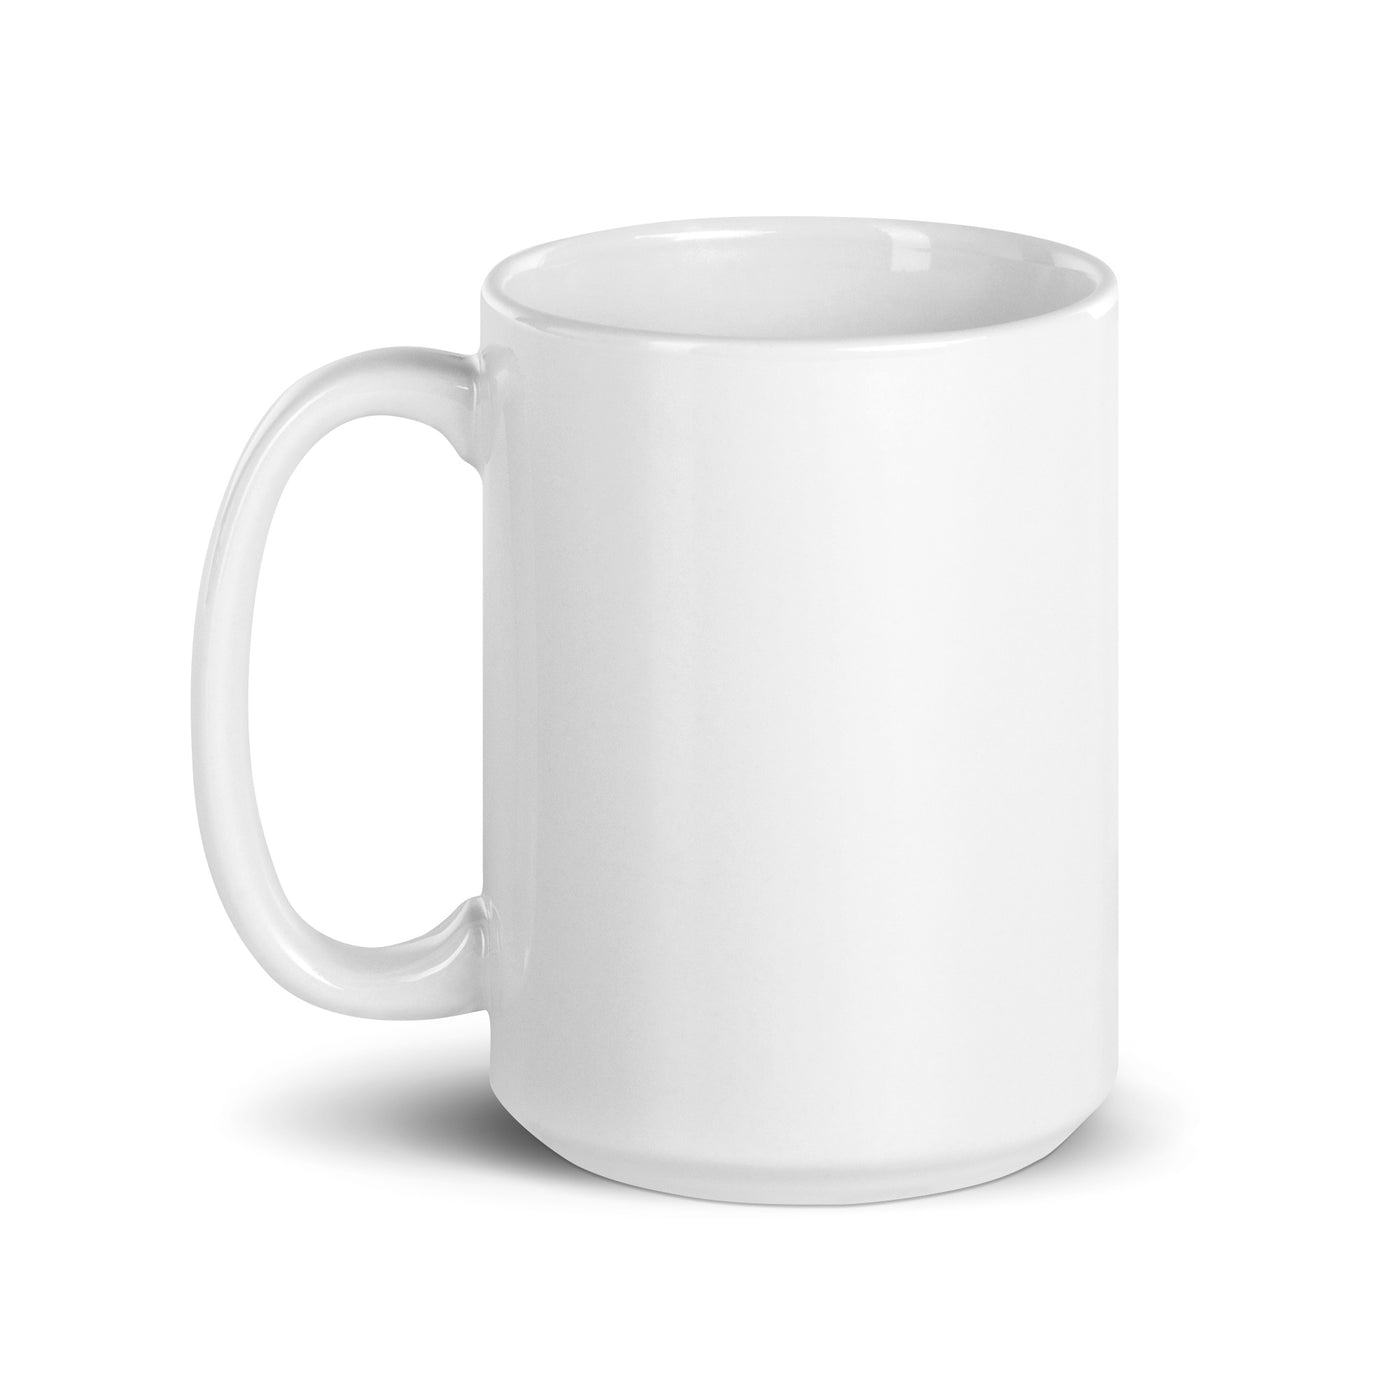 Faketaxy White glossy mug